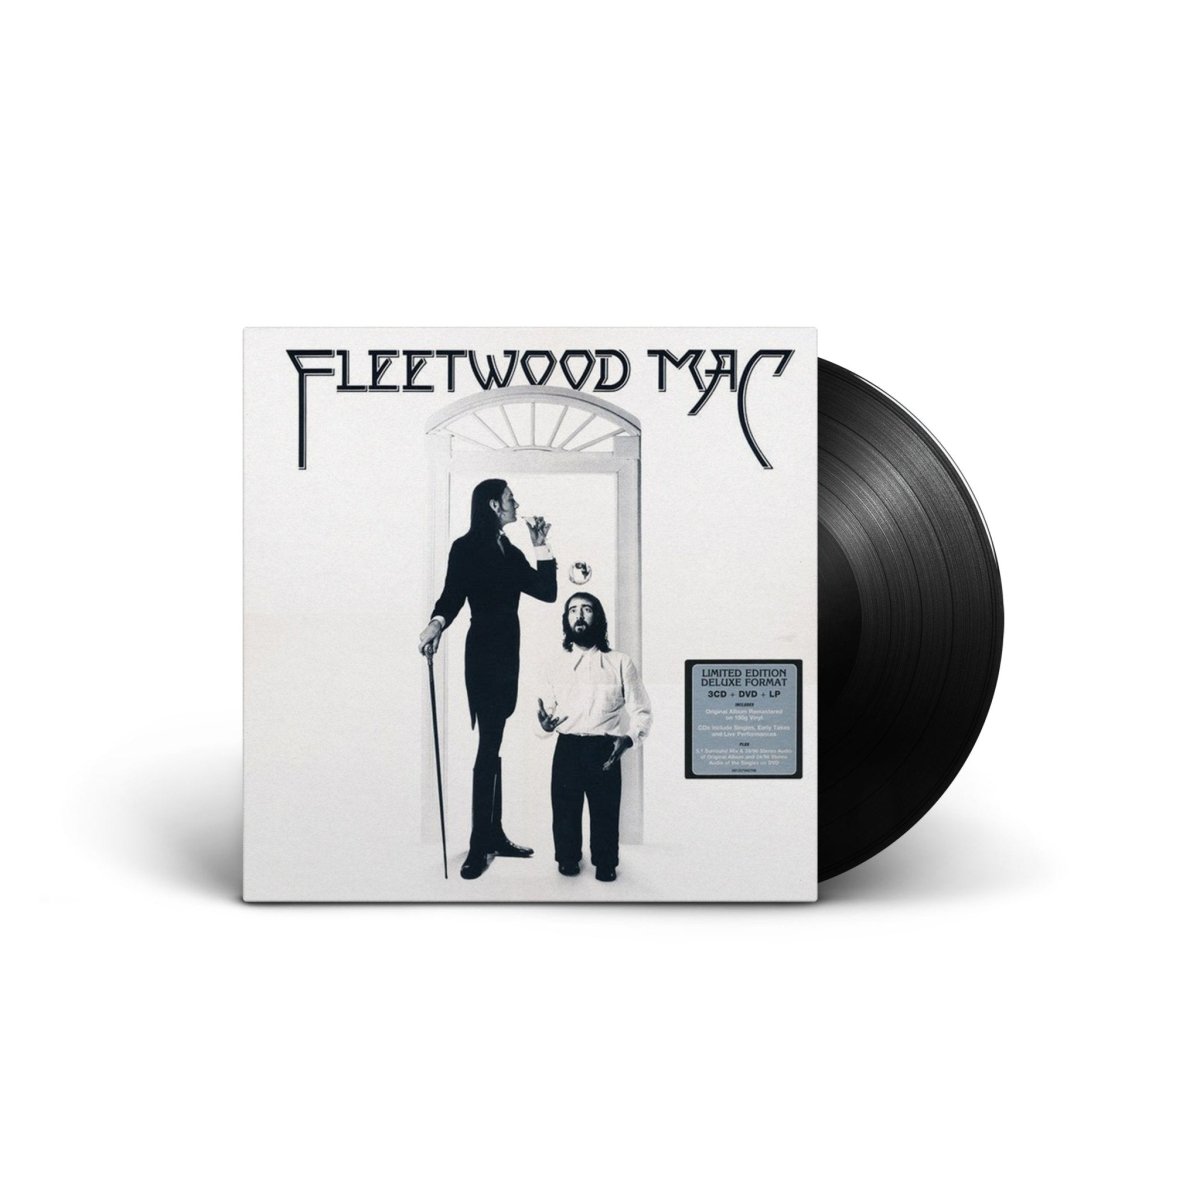 Fleetwood Mac - Fleetwood Mac Music CDs Vinyl